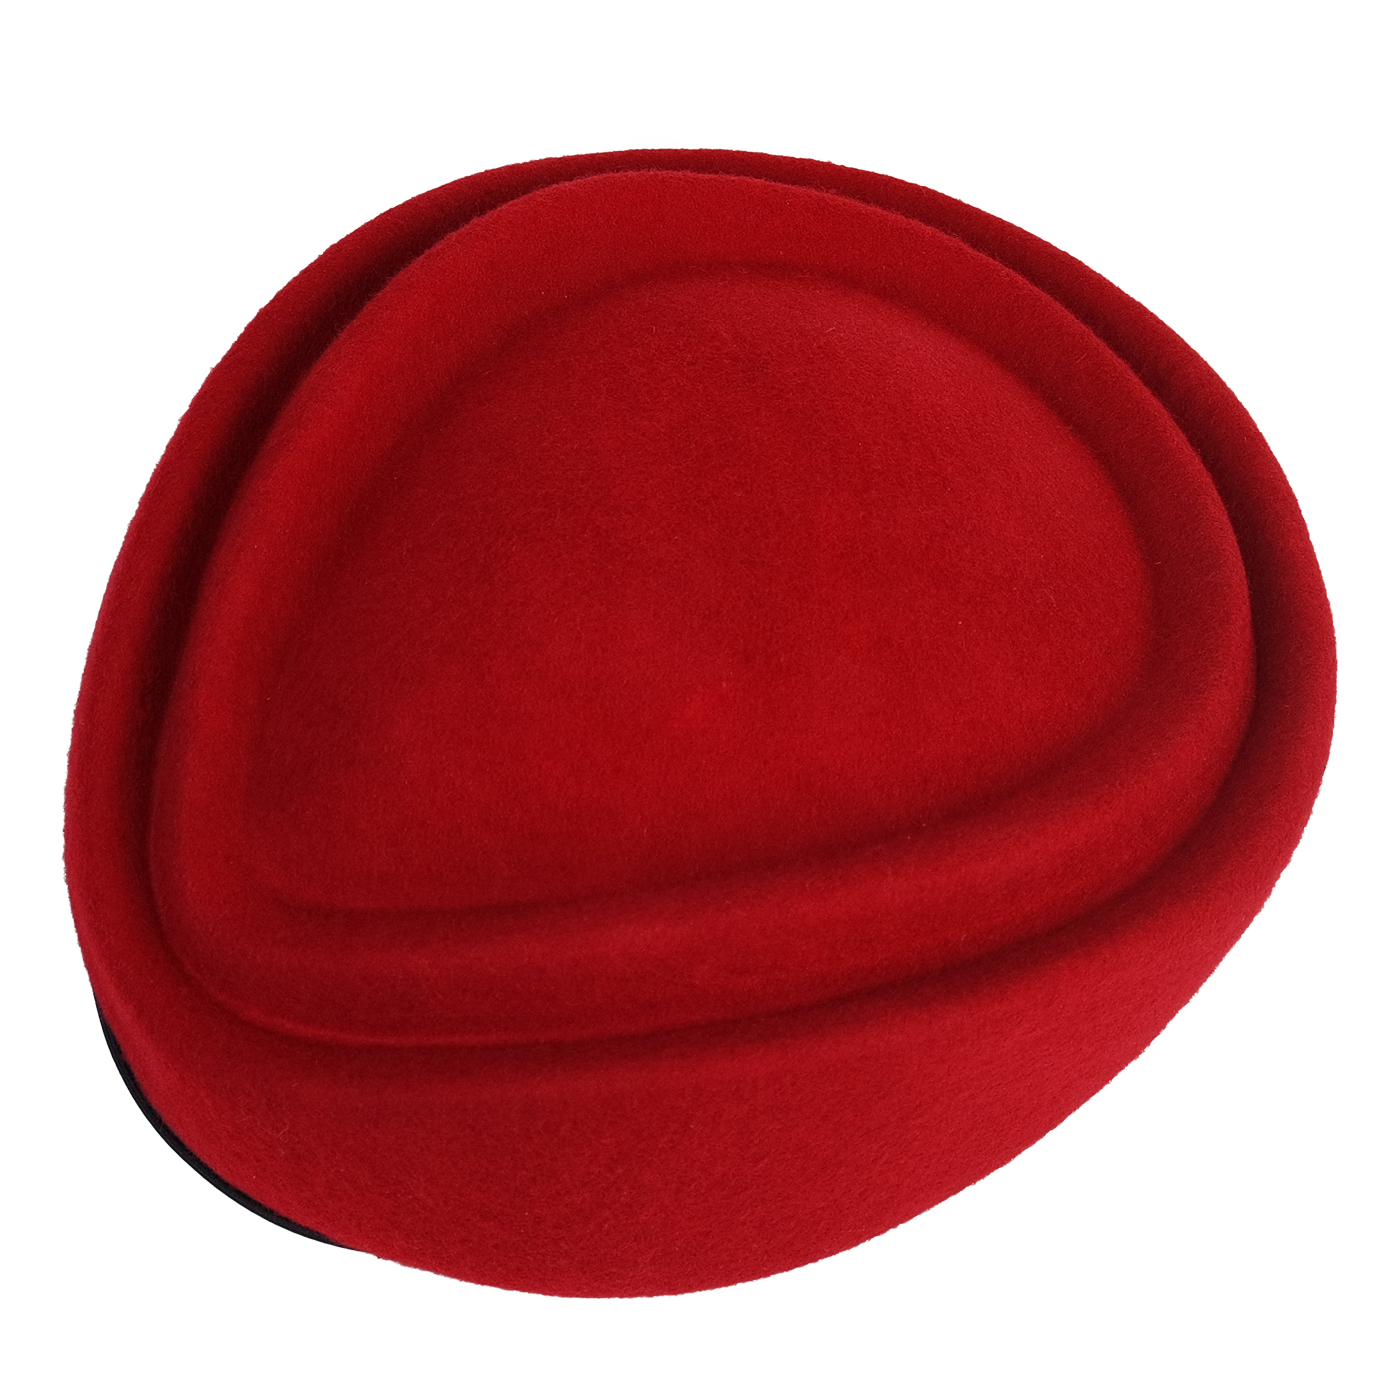 Uni Hut in klassischen Rot